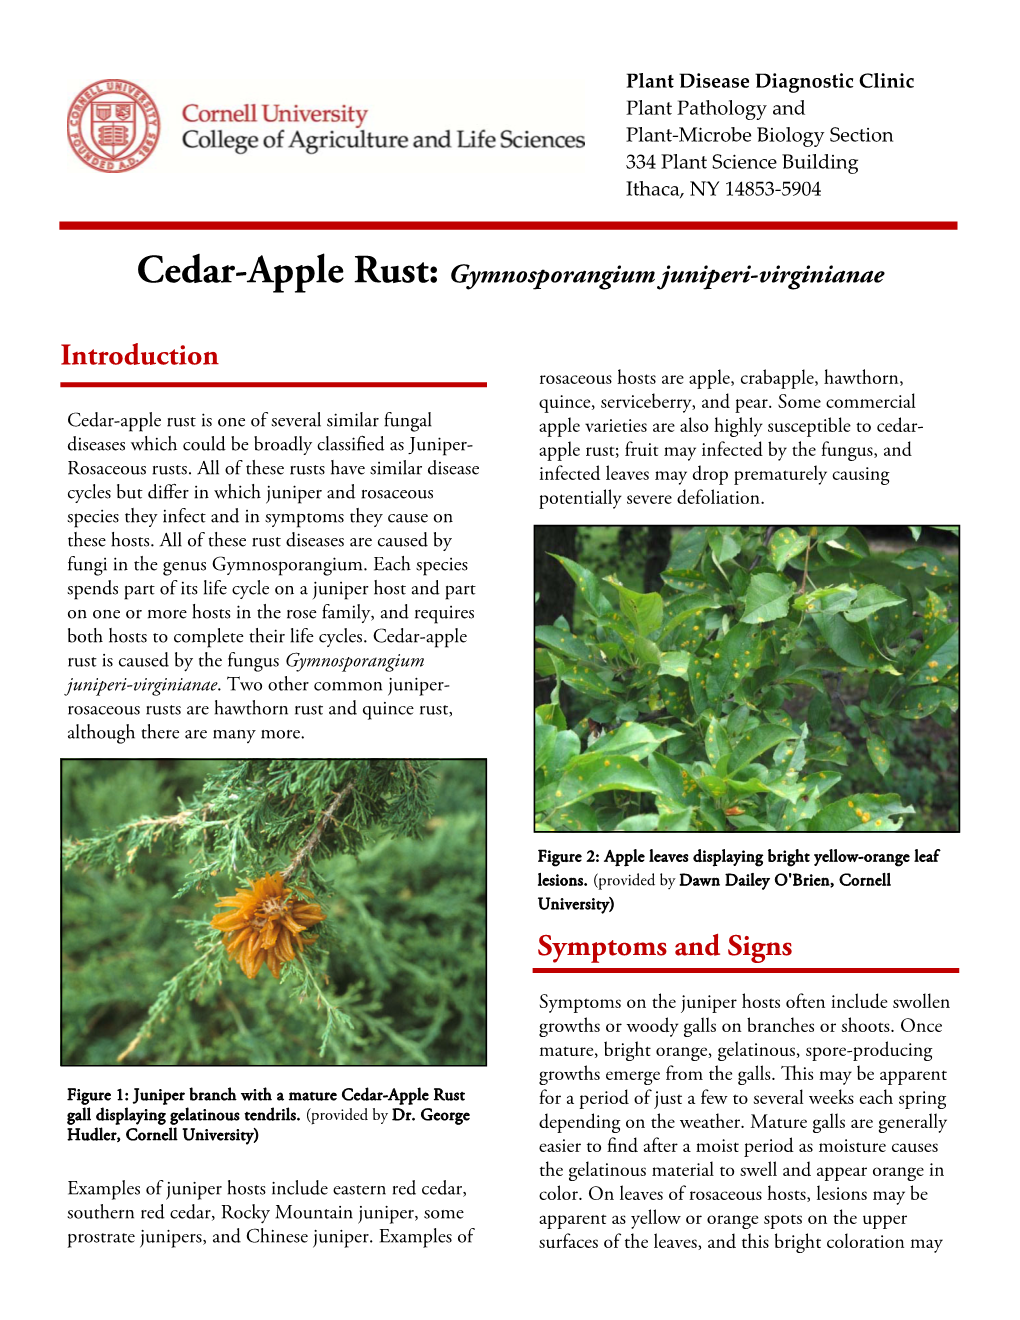 Cedar-Apple Rust: Gymnosporangium Juniperi-Virginianae